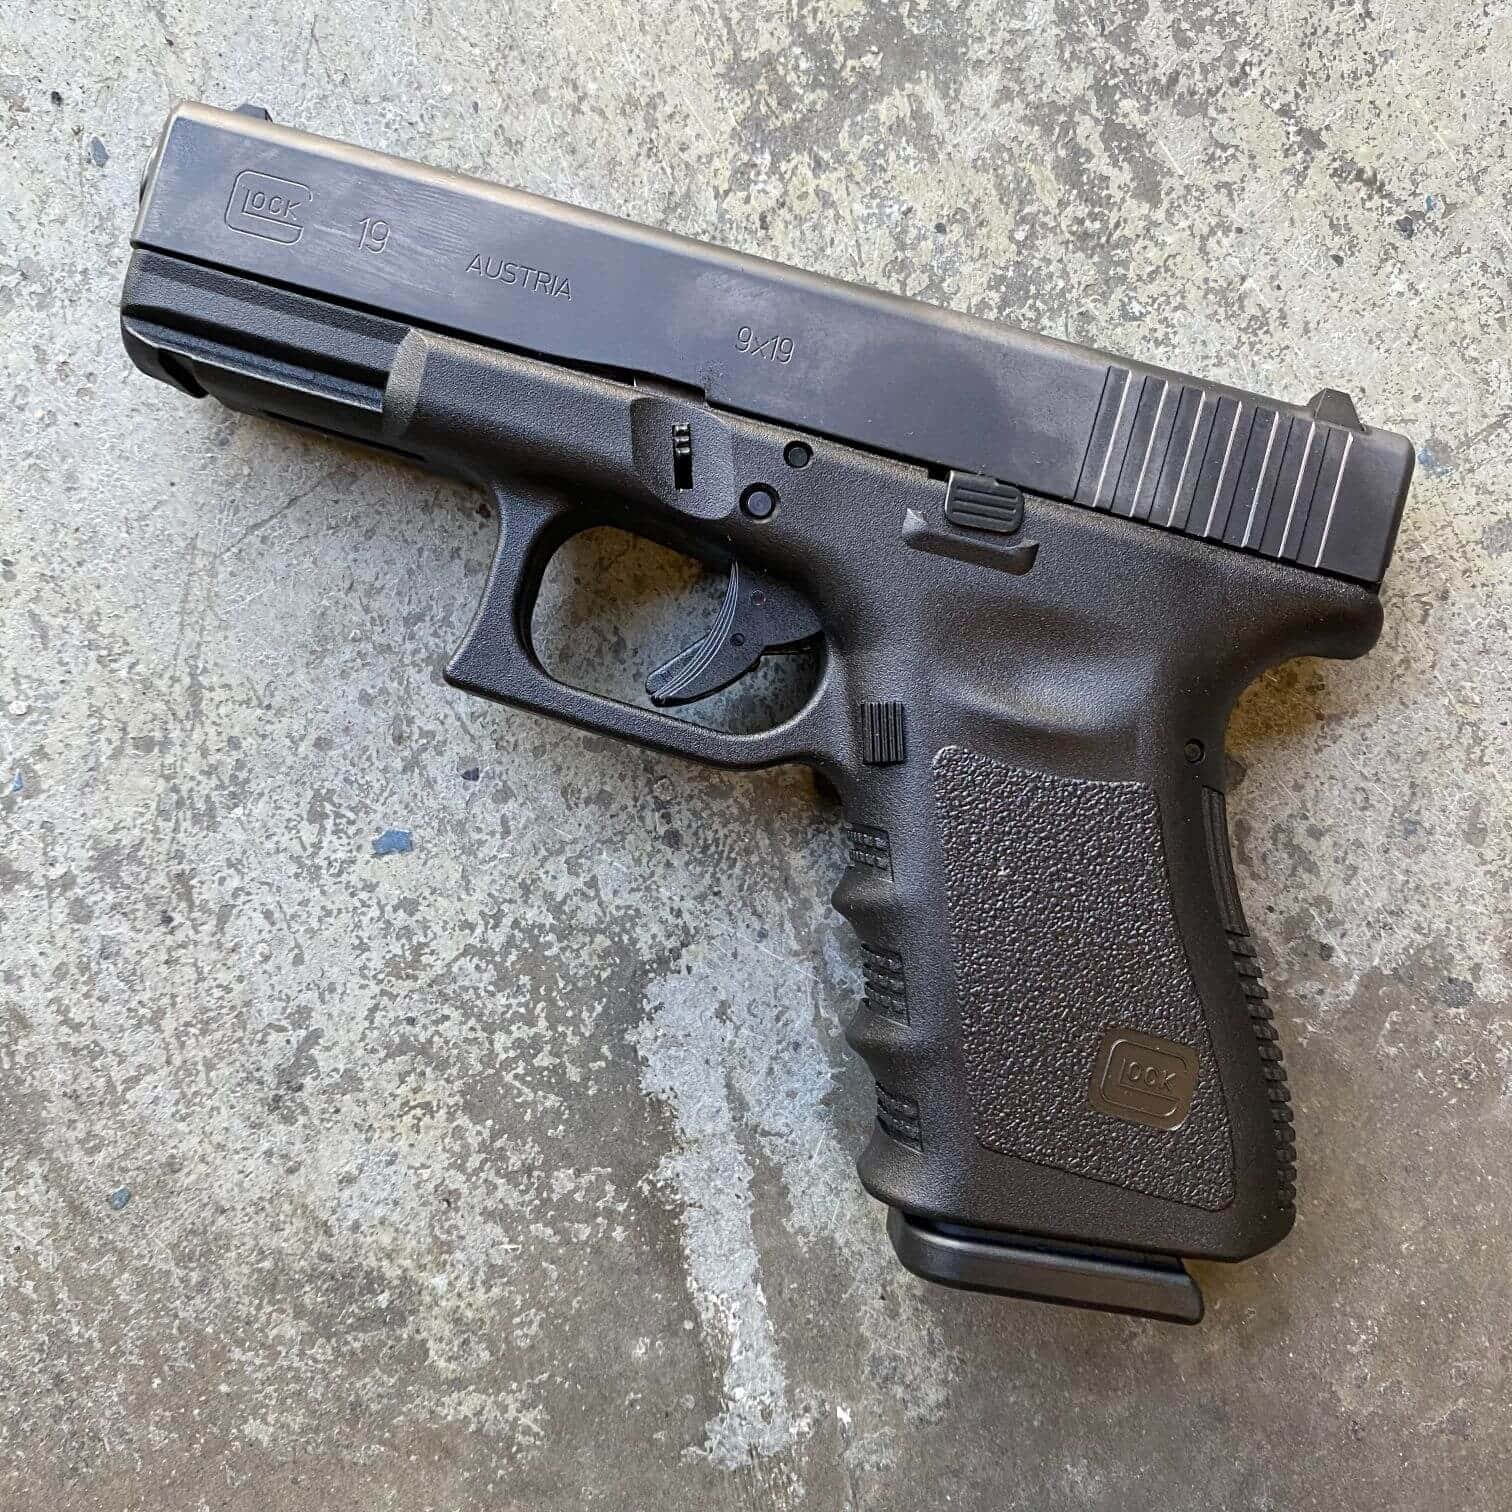 A Black Glock Handgun Is Sitting On A Concrete Surface